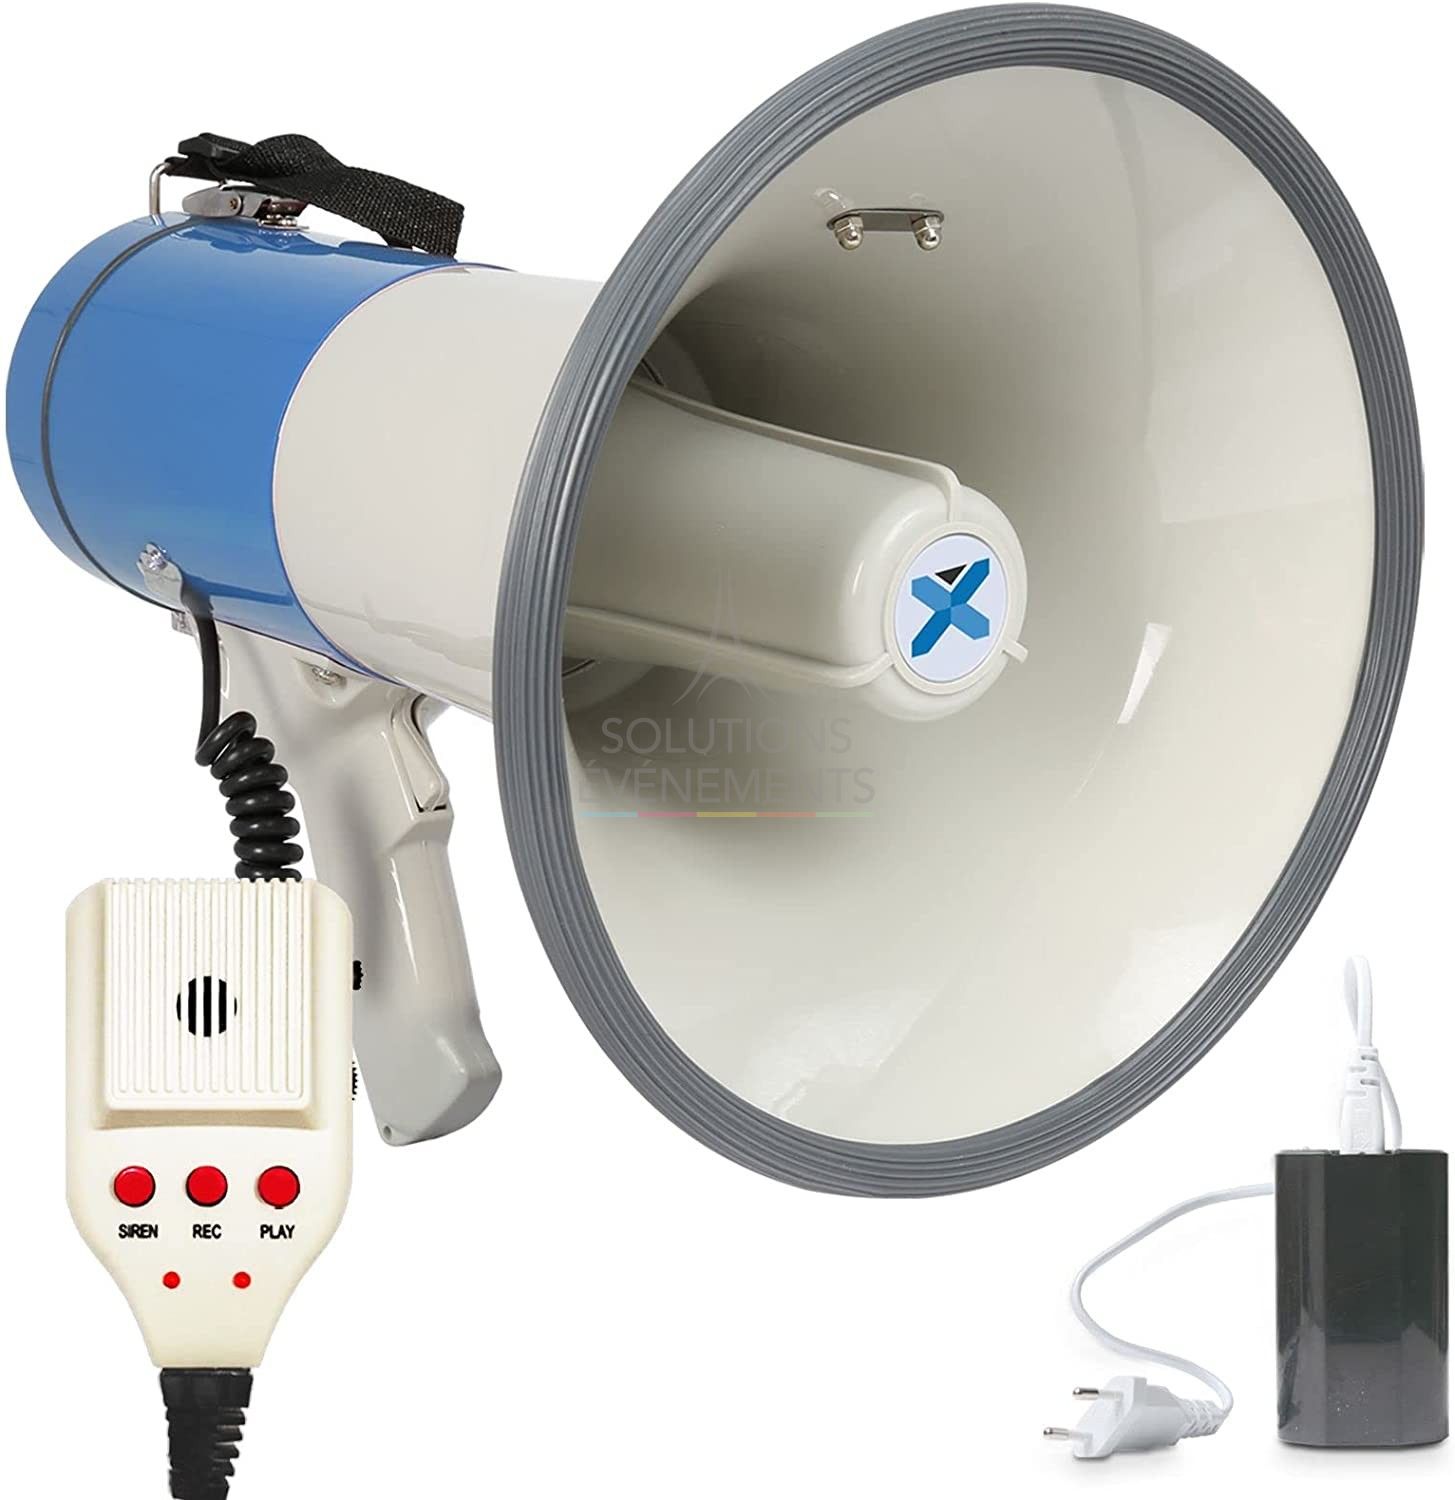 Professional megaphone rental